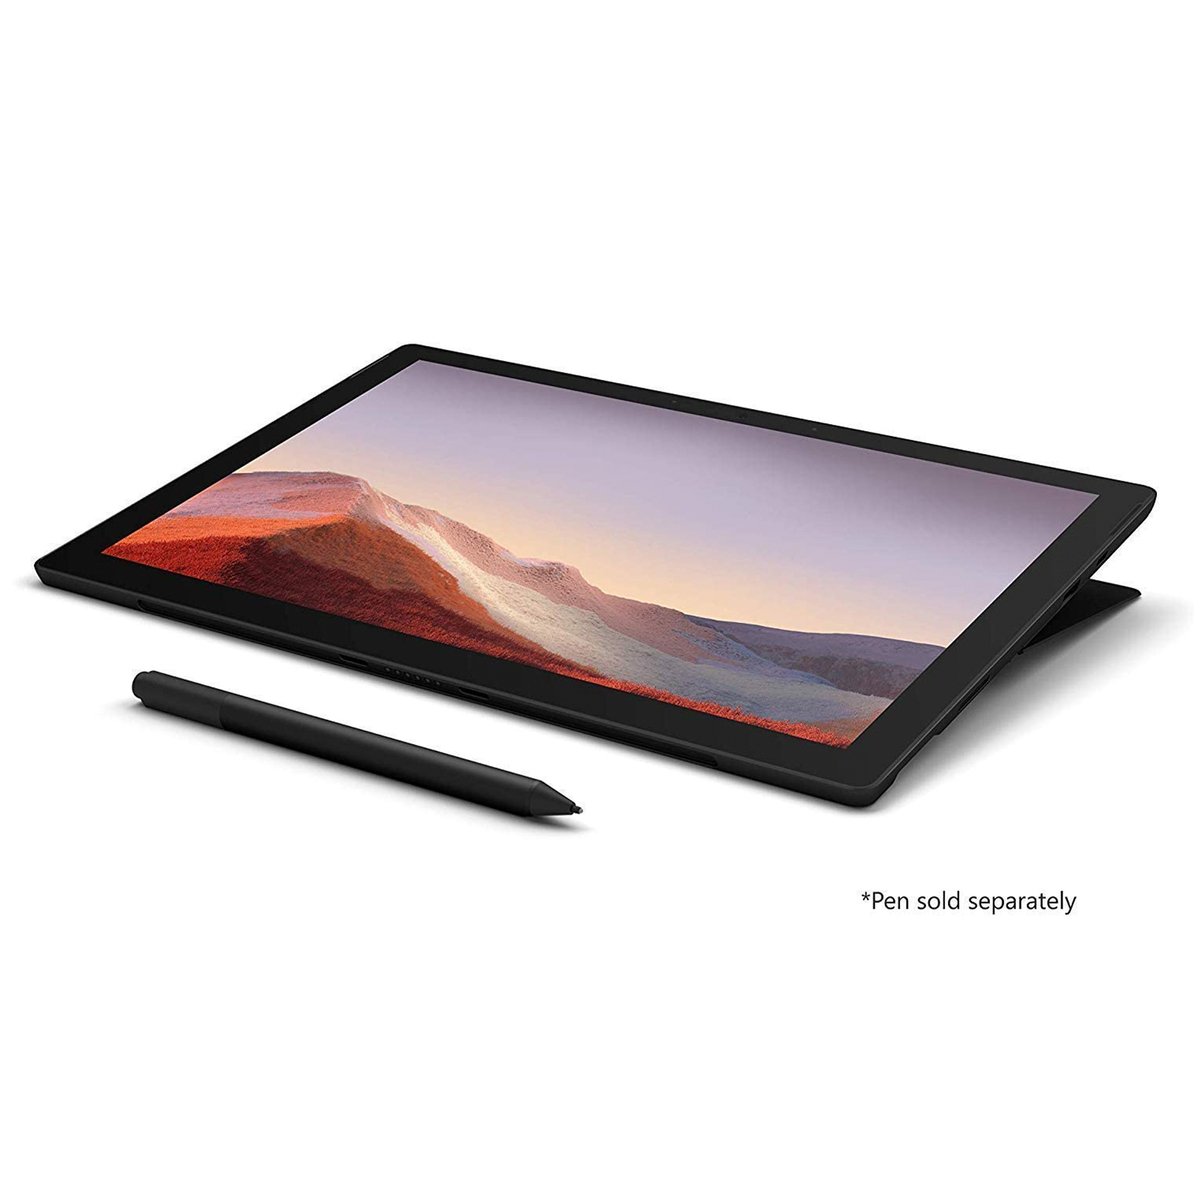 Microsoft Surface Pro 7 (VAT-00020), 2-in-1 Laptop, Intel Core i7-1065G7, 12.3 Inch, 512GB SSD, 16GB RAM, Intel Iris Plus Graphics, Windows 10, No Keyboard, Black+Type Cover